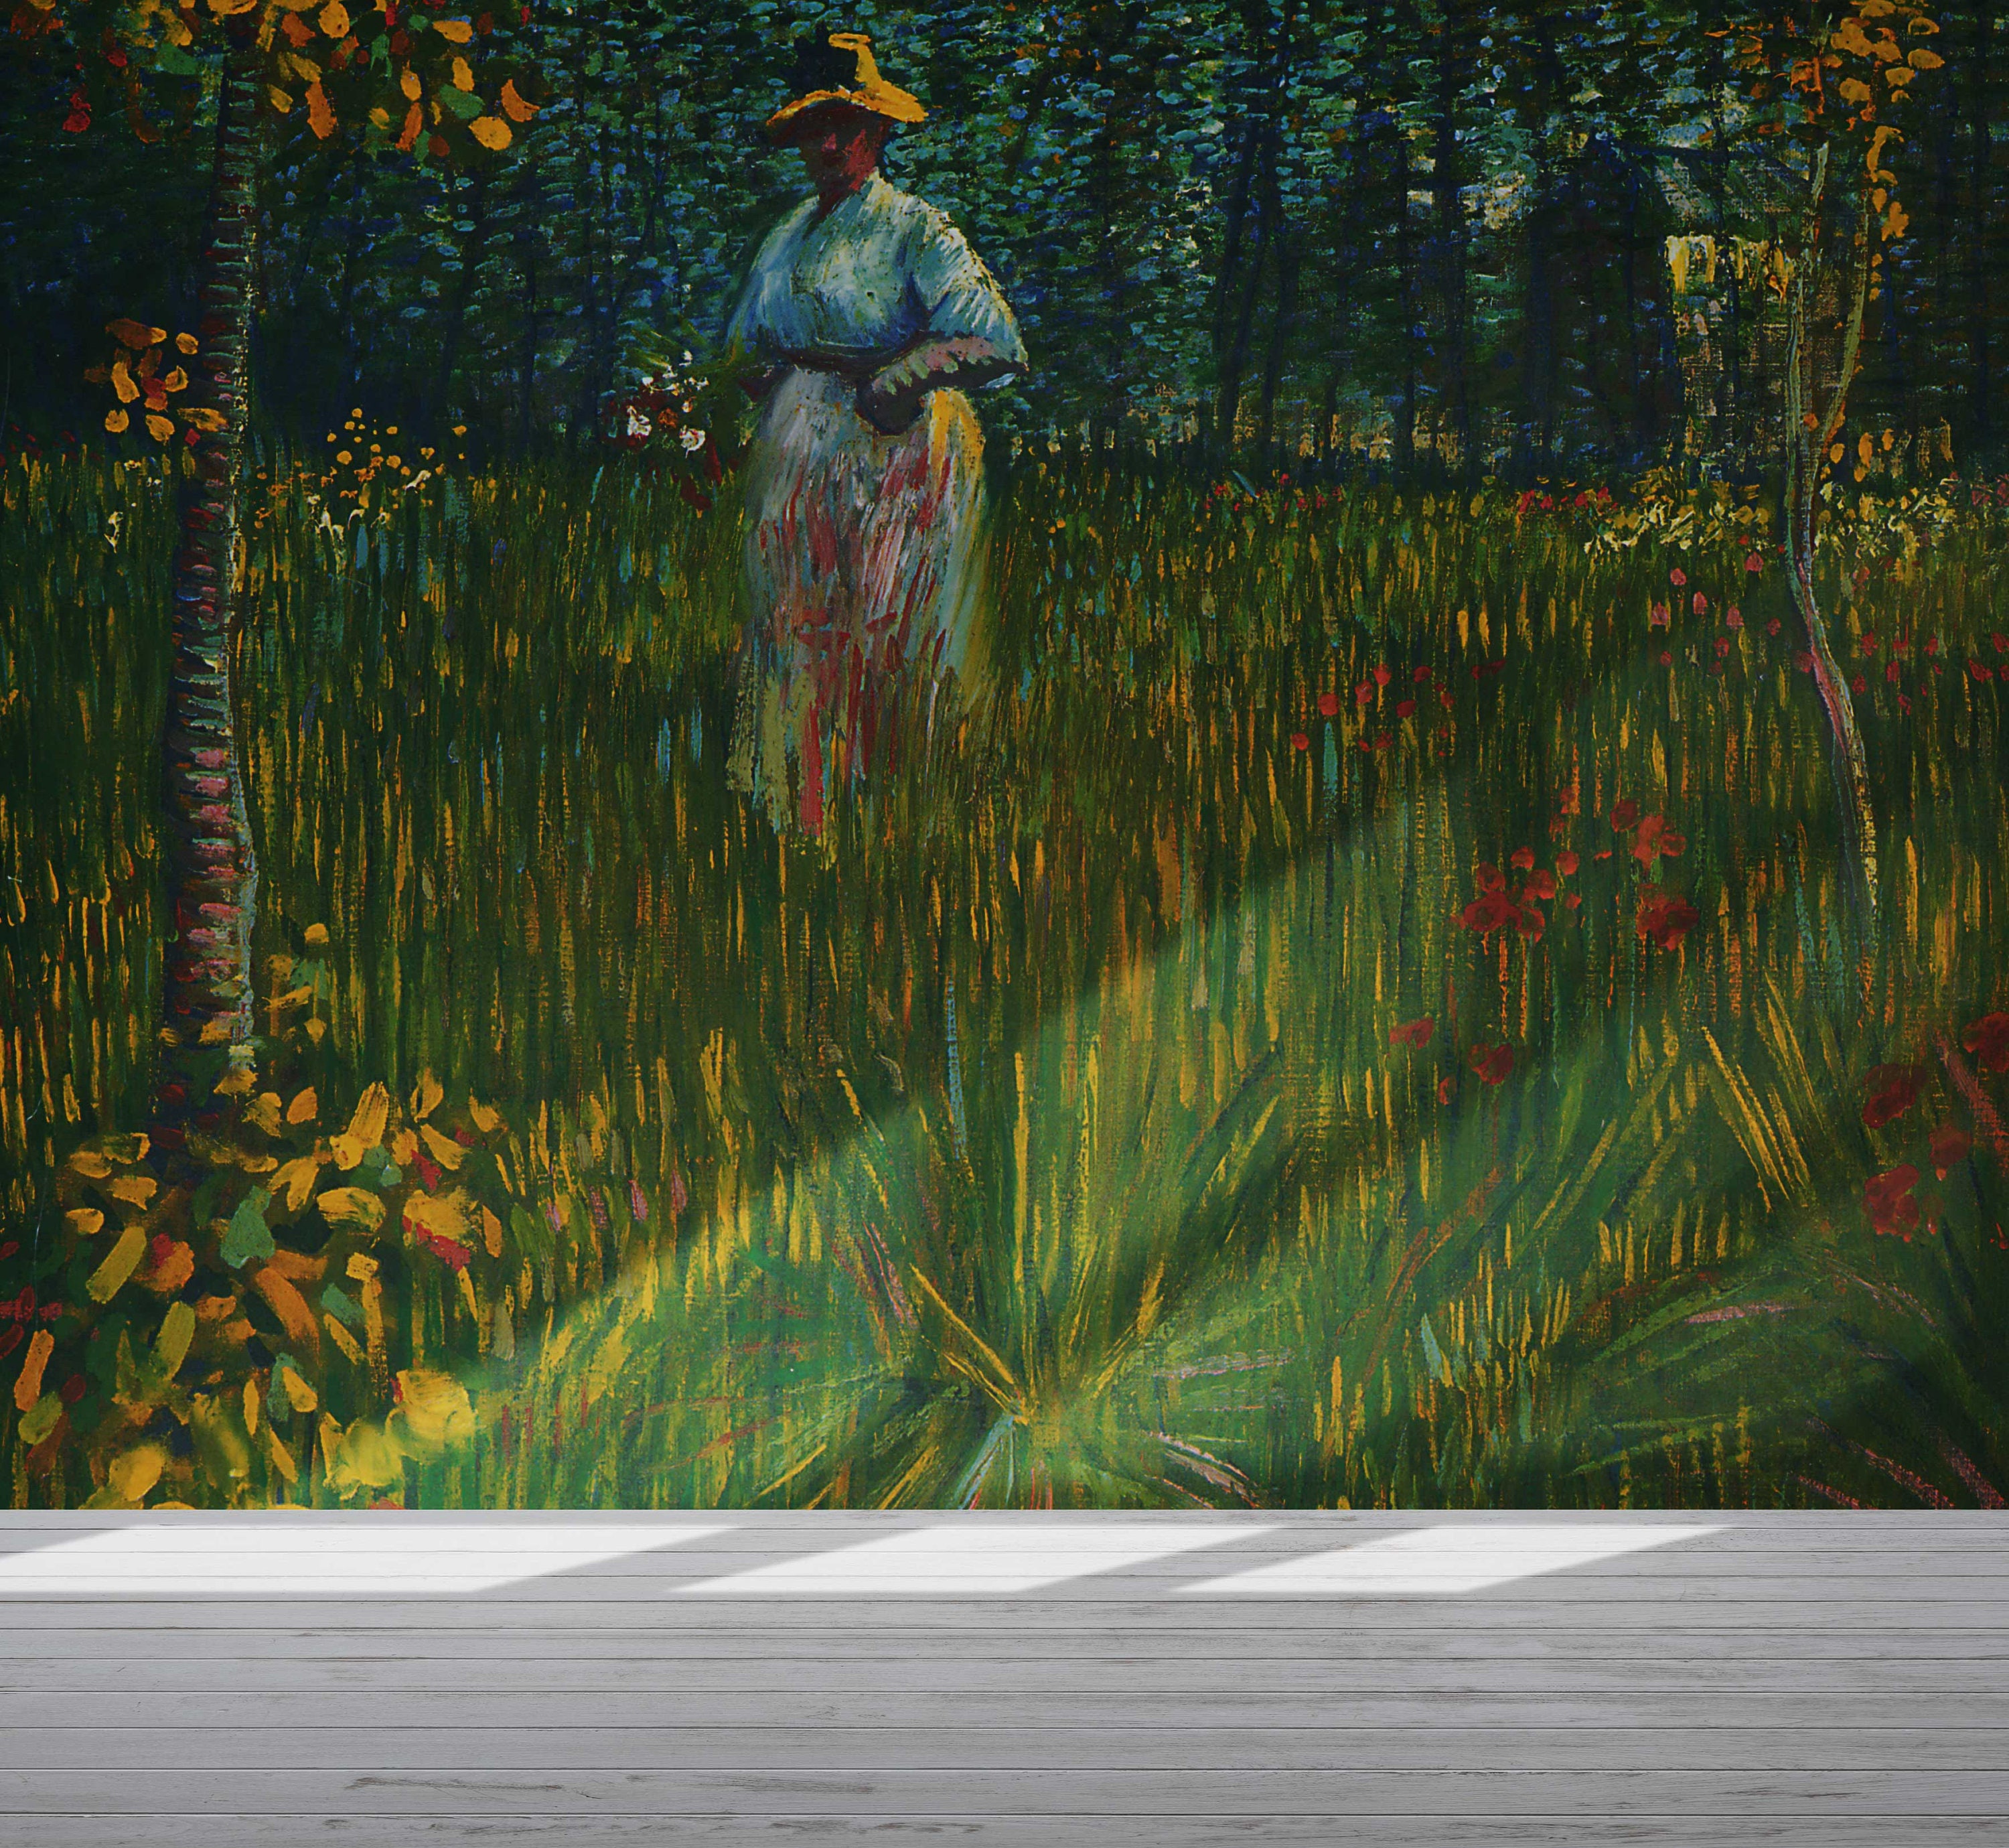 Van Gogh Wall Poster , Peel and Stick Gogh Art Work Wall Mural , Art Deco  Wallpaper , Oil Paint Van Gogh Mural 